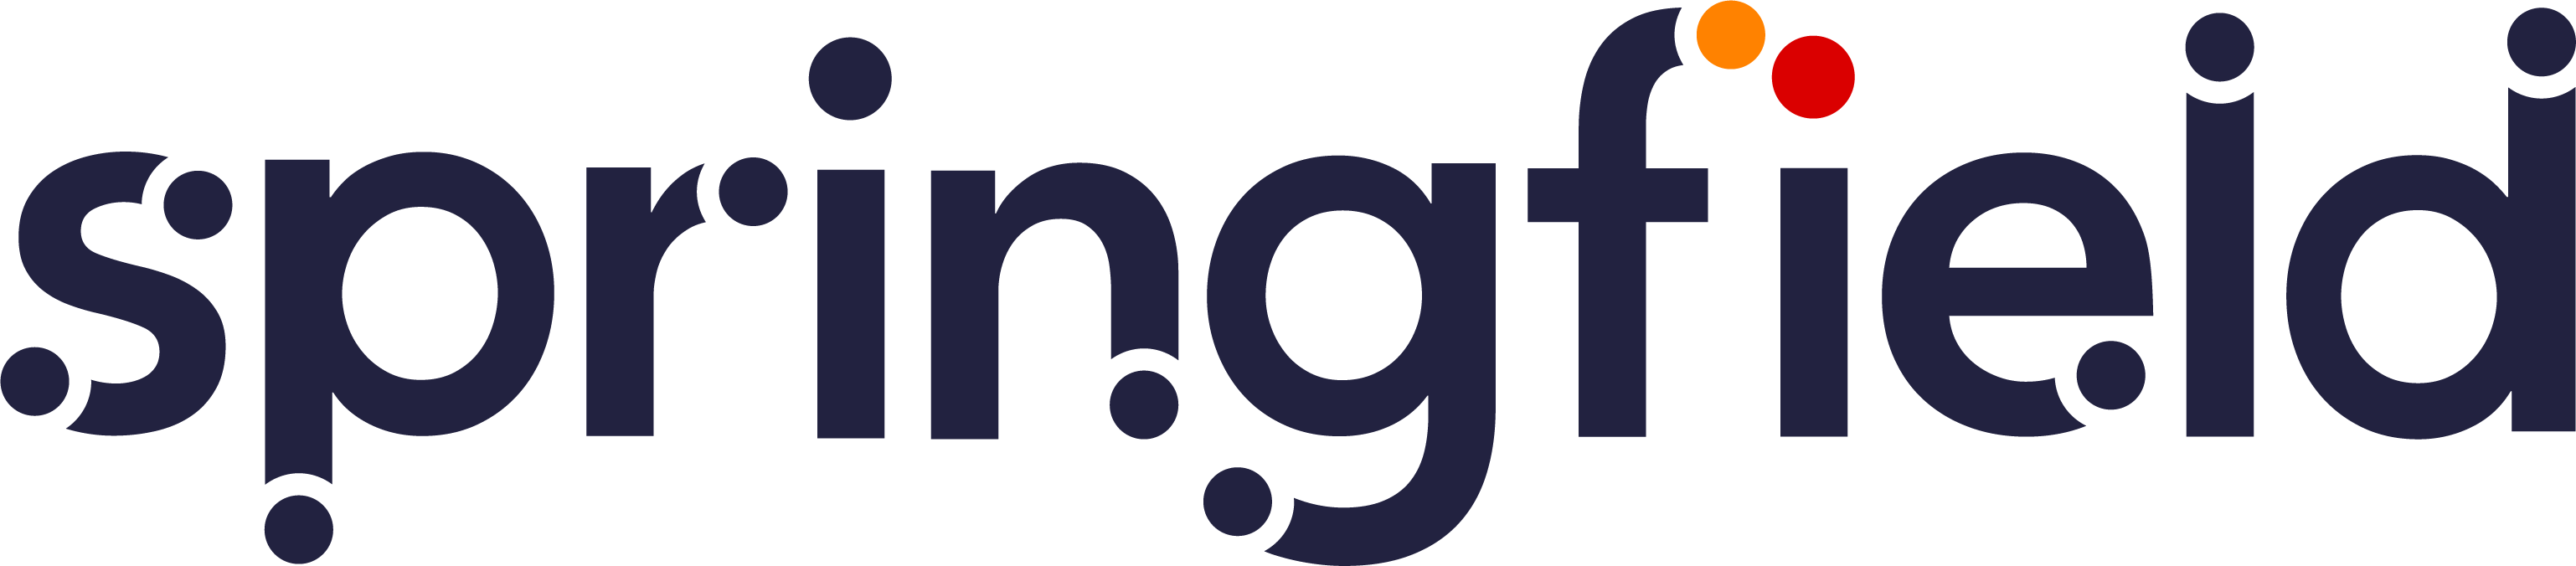 logo springfield